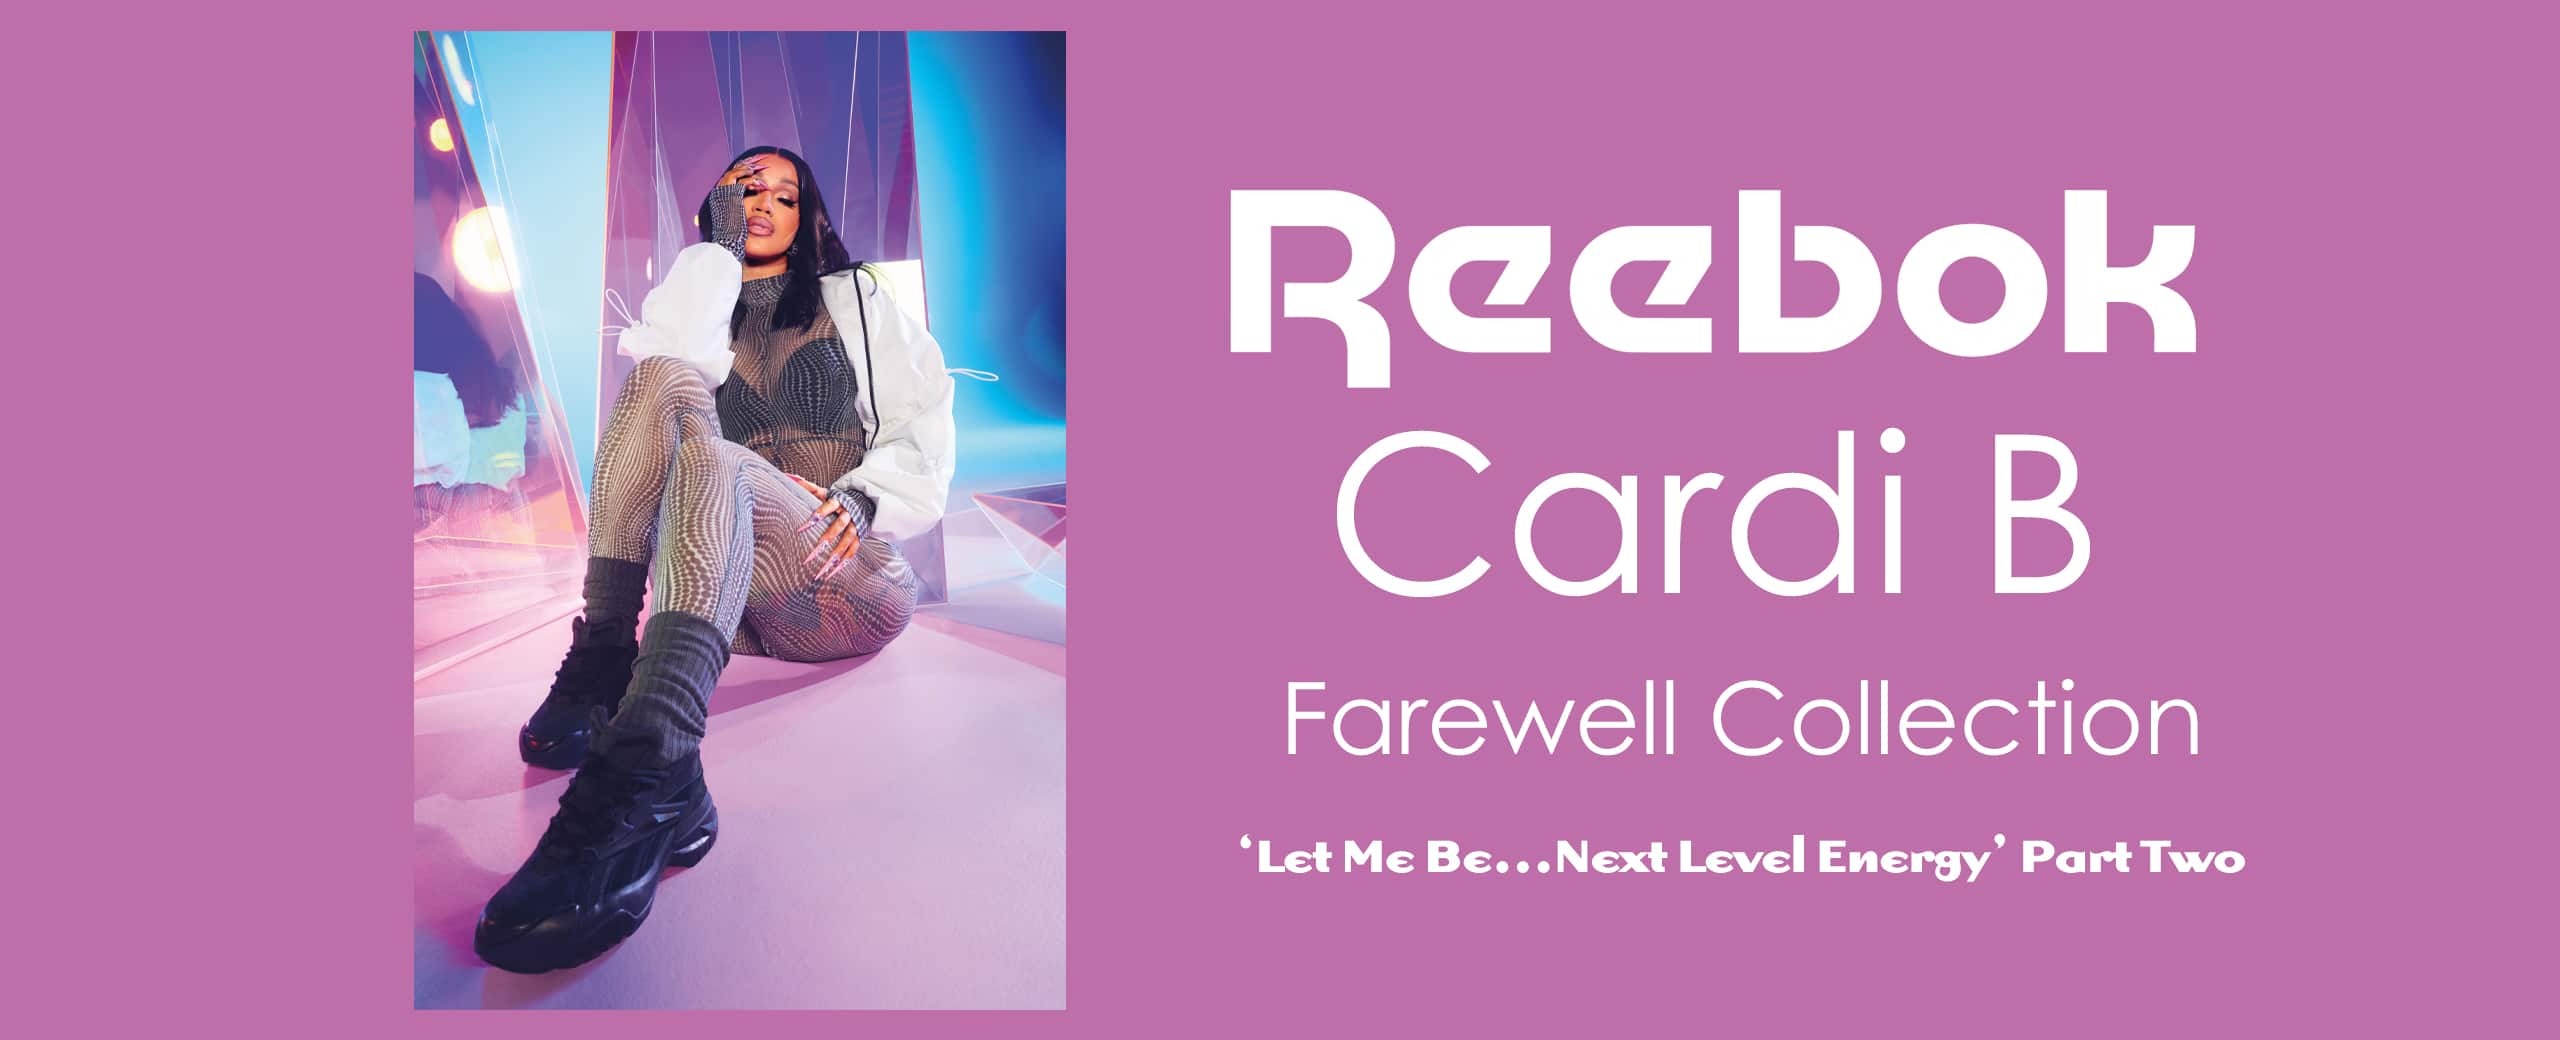 "Reebok x Cardi B ‘Let Me Be...Next Level Energy’ Part Two"